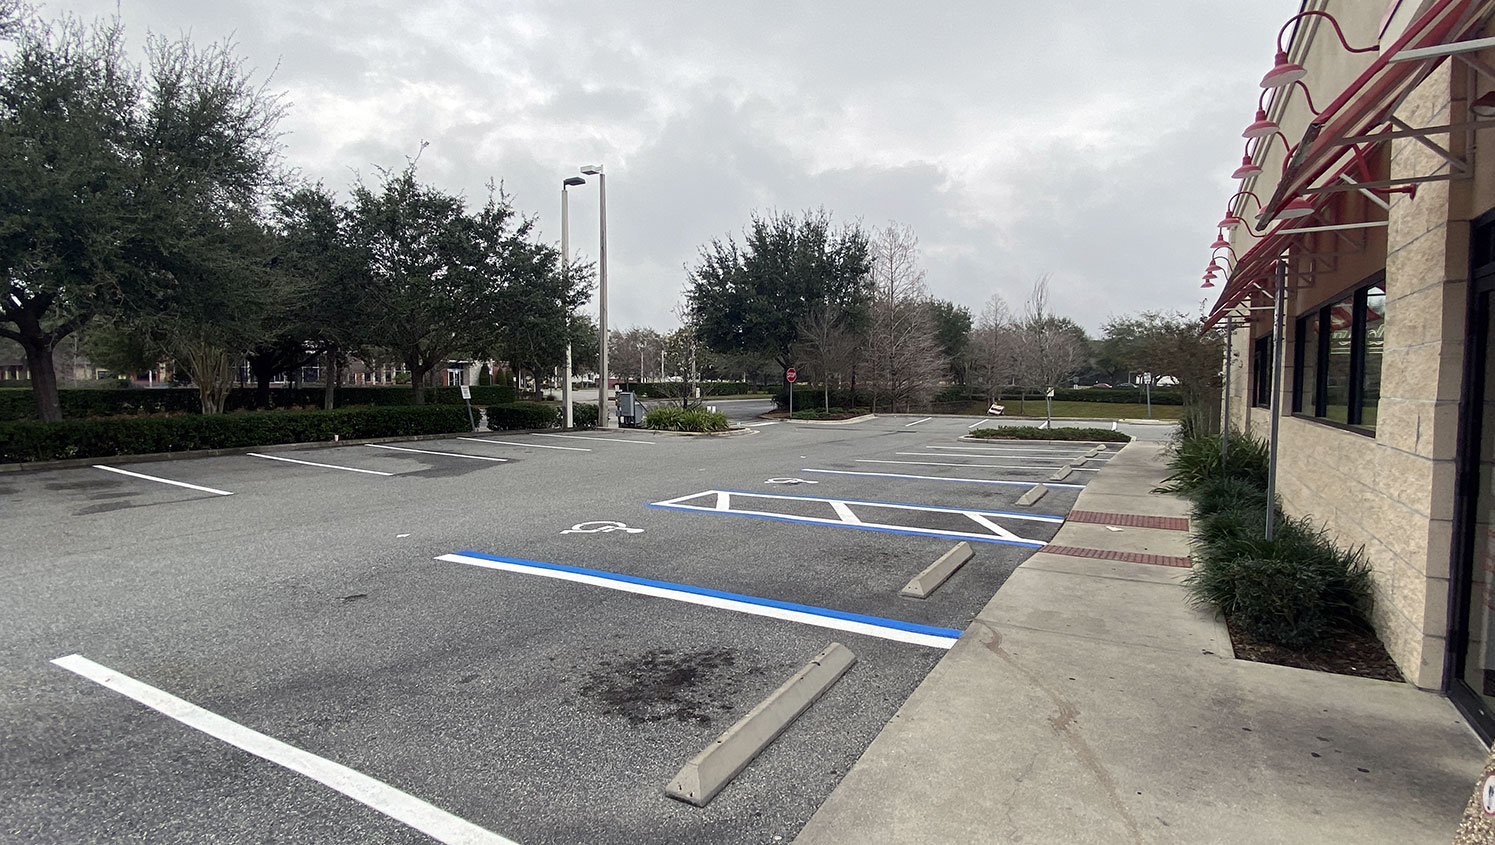 new parking spaces at a Freddy’s Frozen Custard & Steakburgers in Orlando, FL